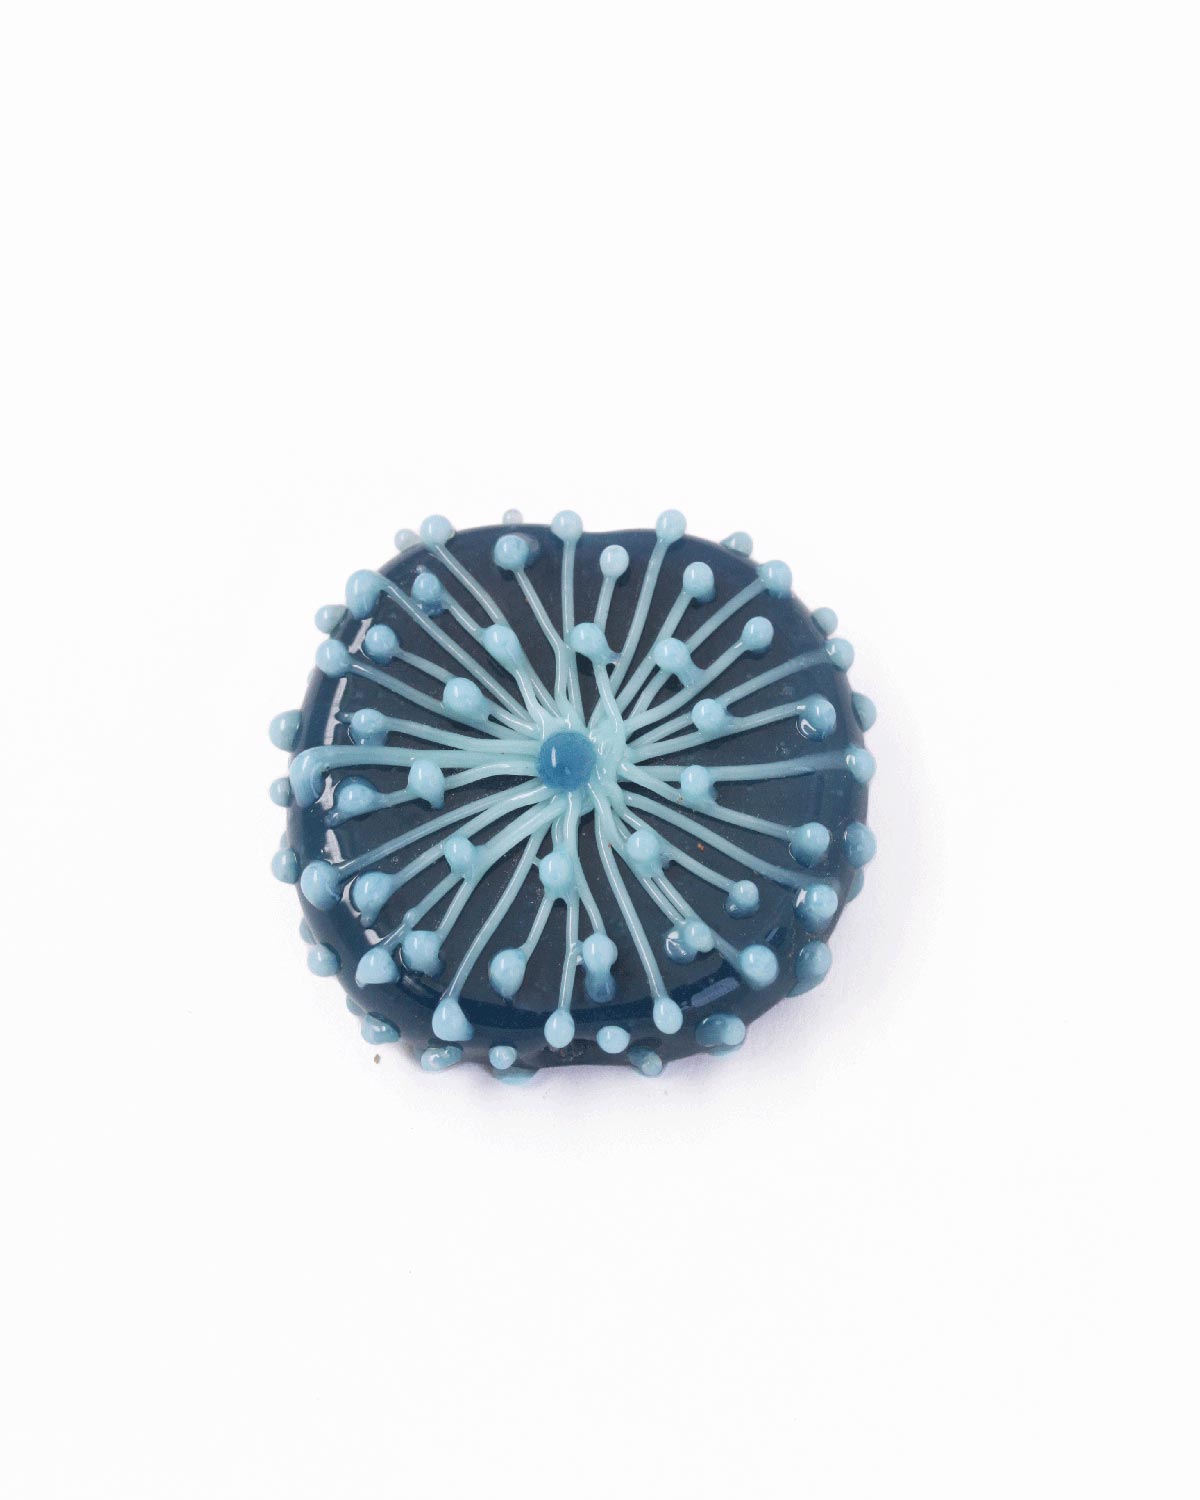 Handmade dandelion glass beads Turquoise en teal